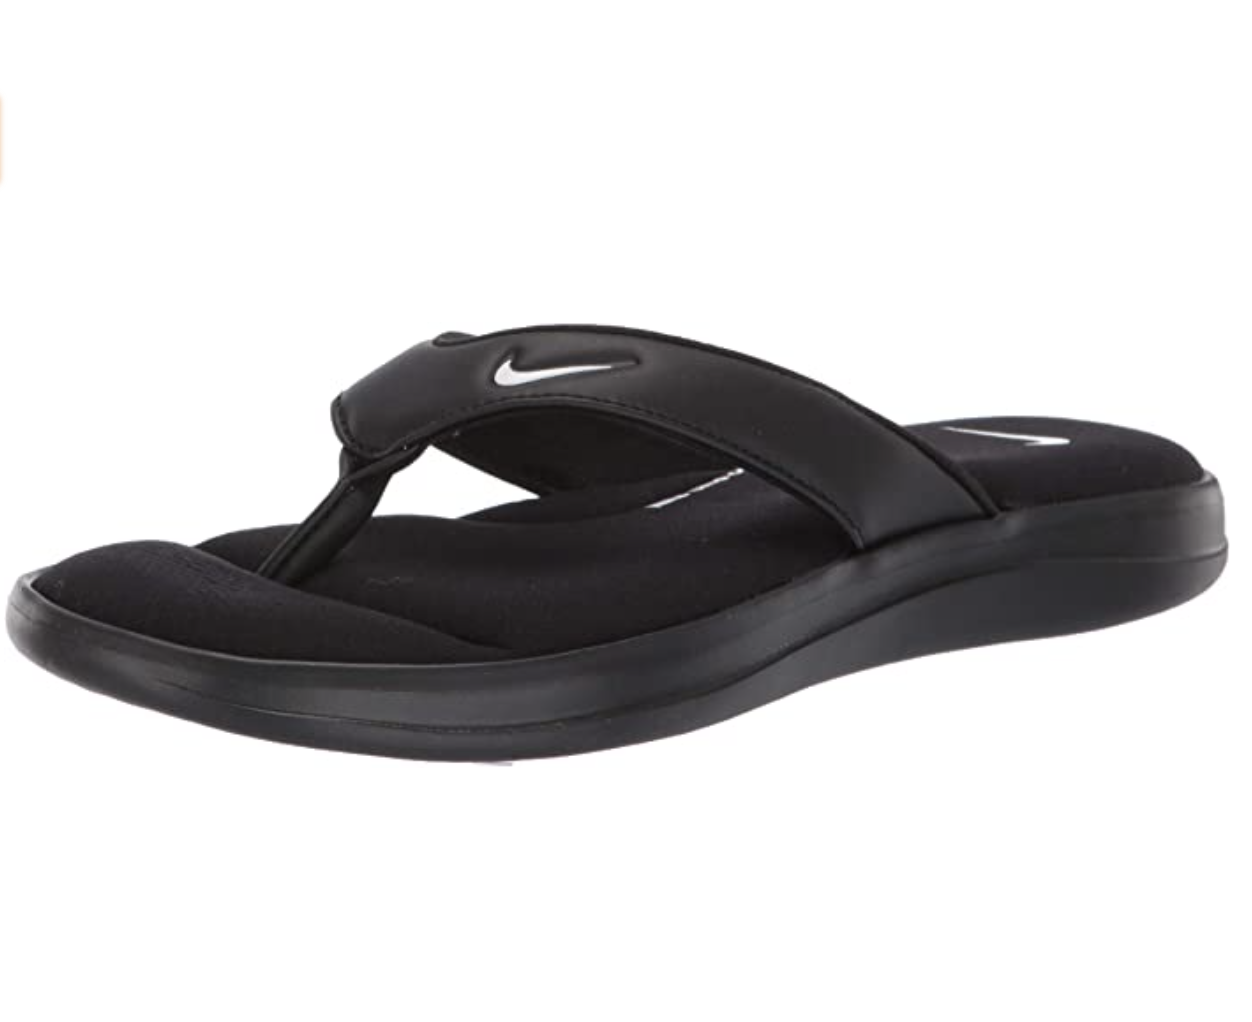 Teknologi forsvar Certifikat Nike Ultra Comfort 3 Synthetic Leather Cushioned Flip Flops For Women